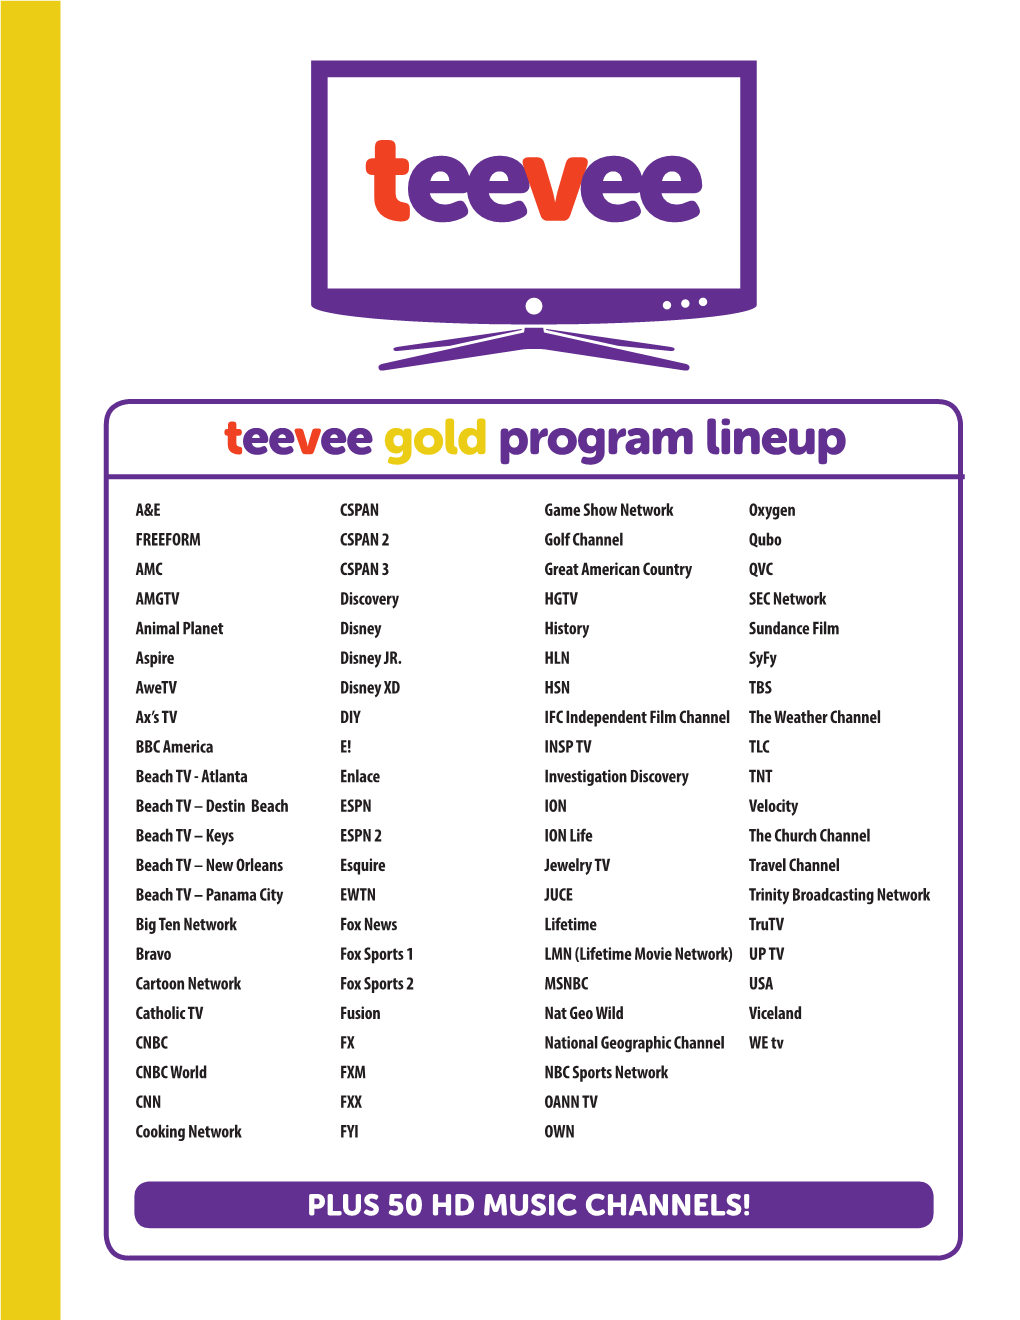 Teevee Gold Program Lineup